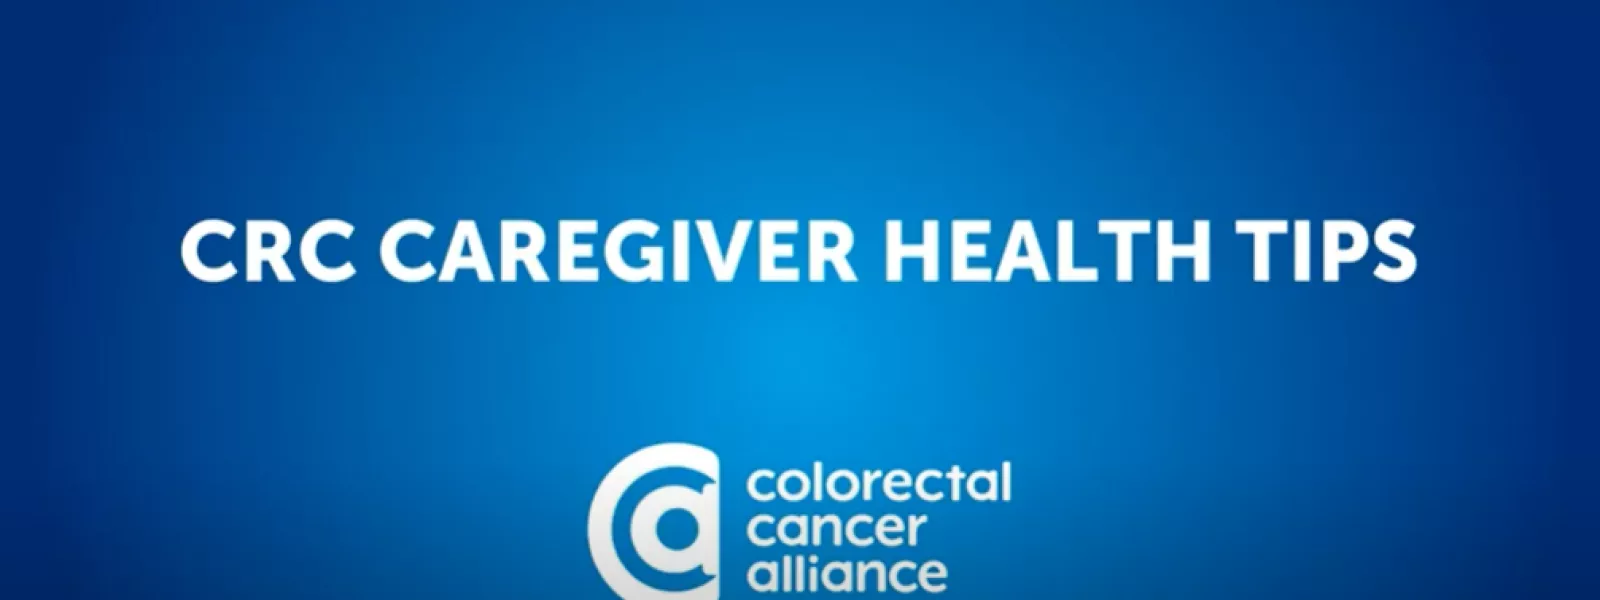 crc caregiver health video